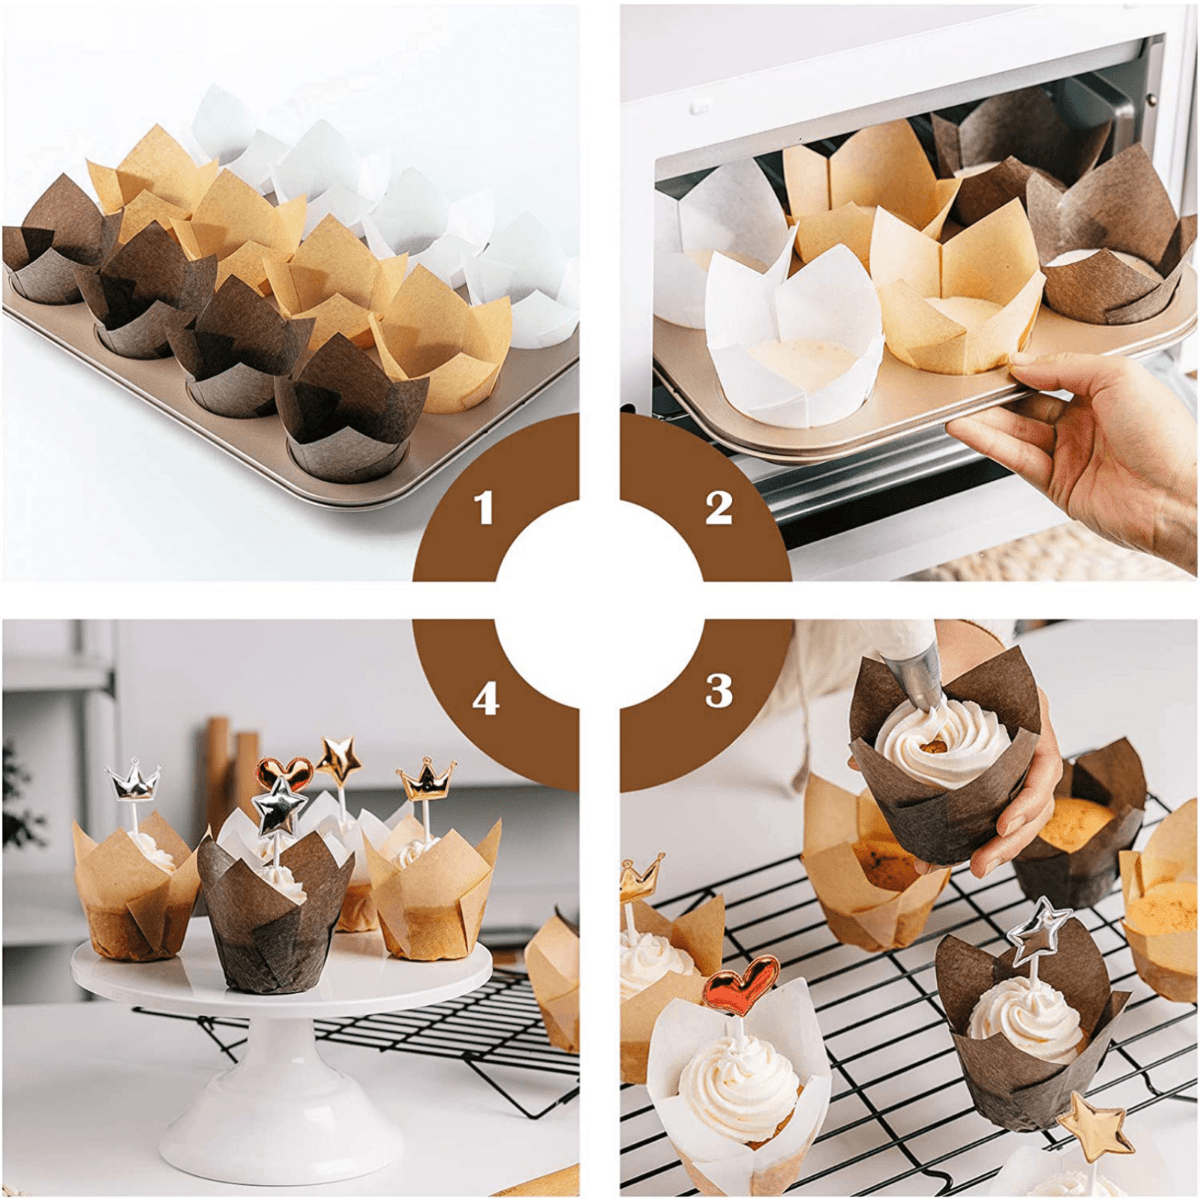 How to Make Cupcake Liners 